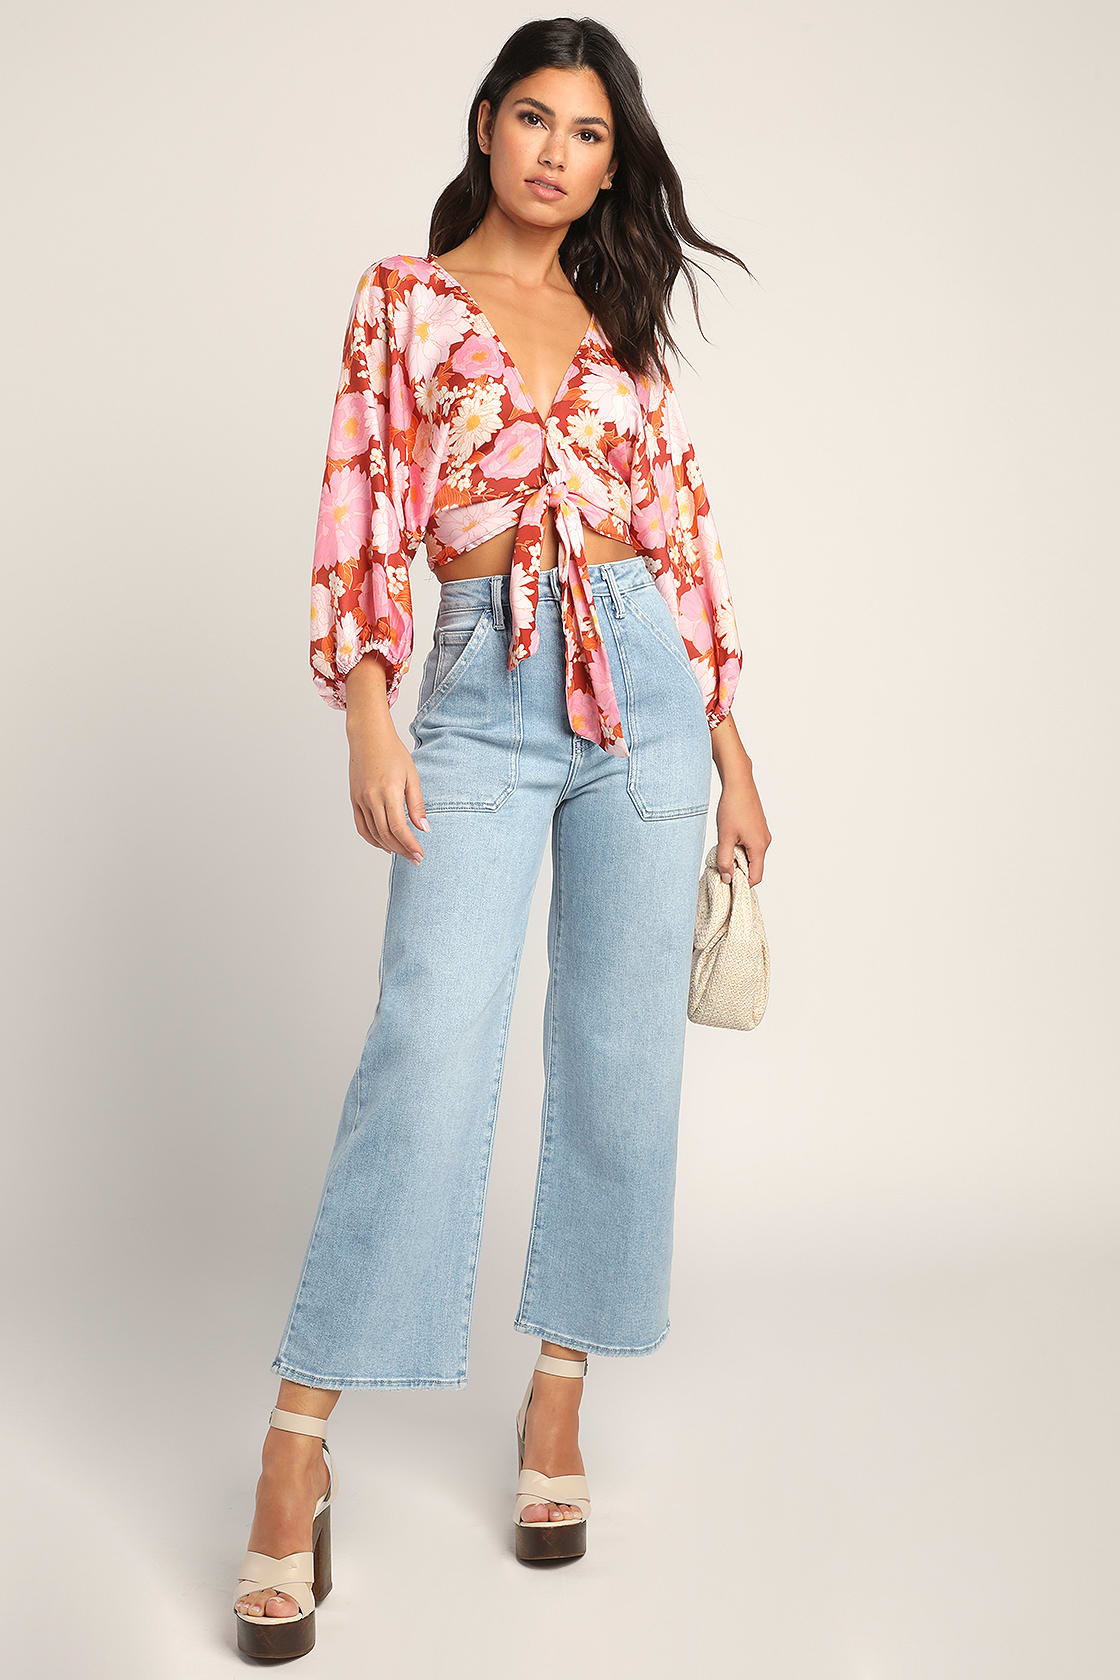 Model is wearing wide-leg denim jeans, platform heels and a floral top